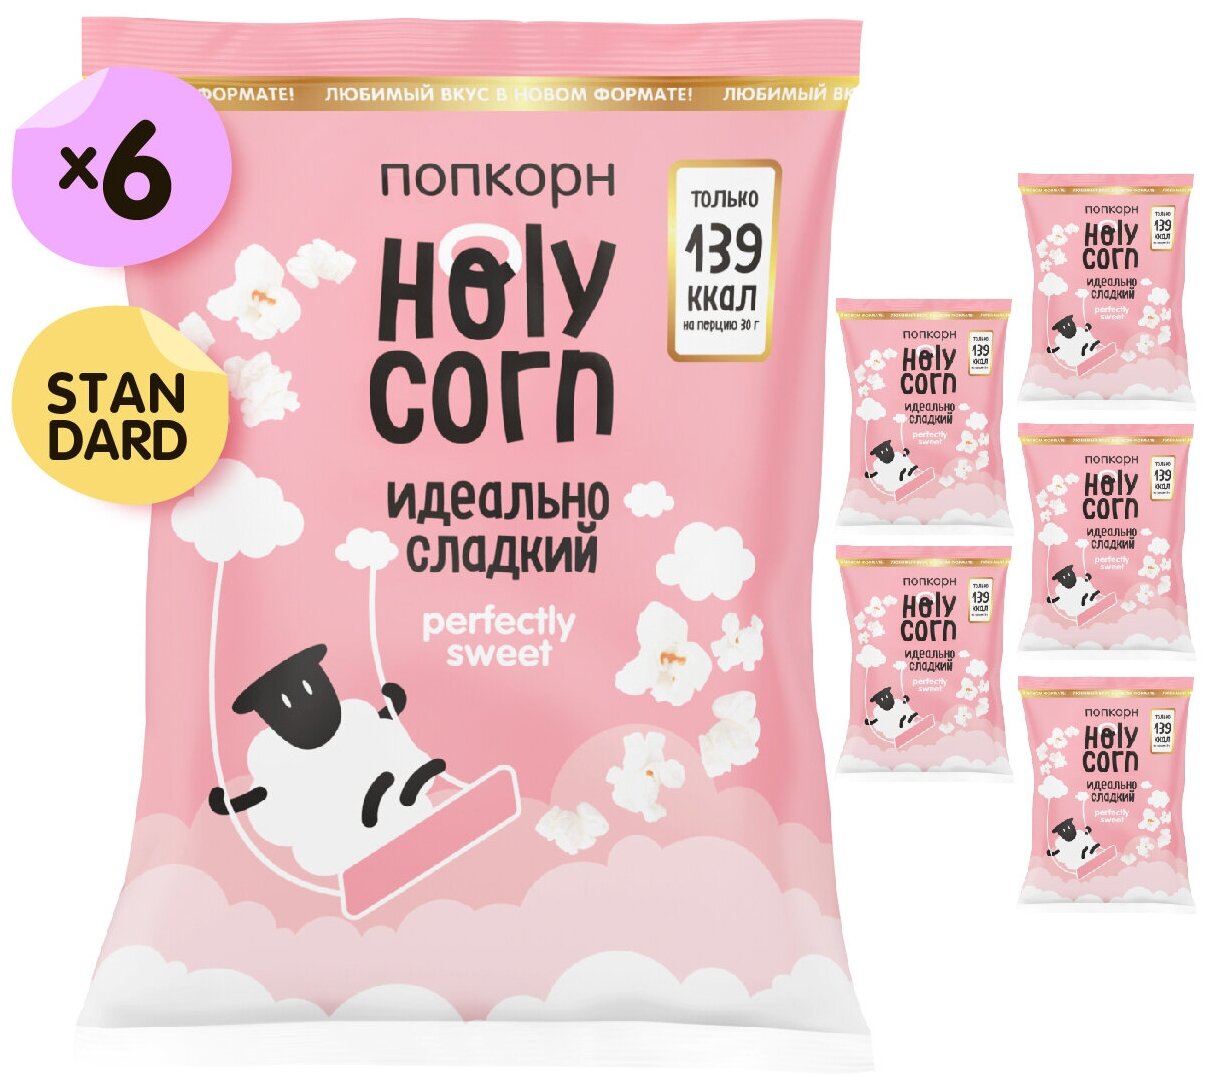 Попкорн готовый Holy Corn "Идеально сладкий" Стандартная пачка 45 г х 6 шт